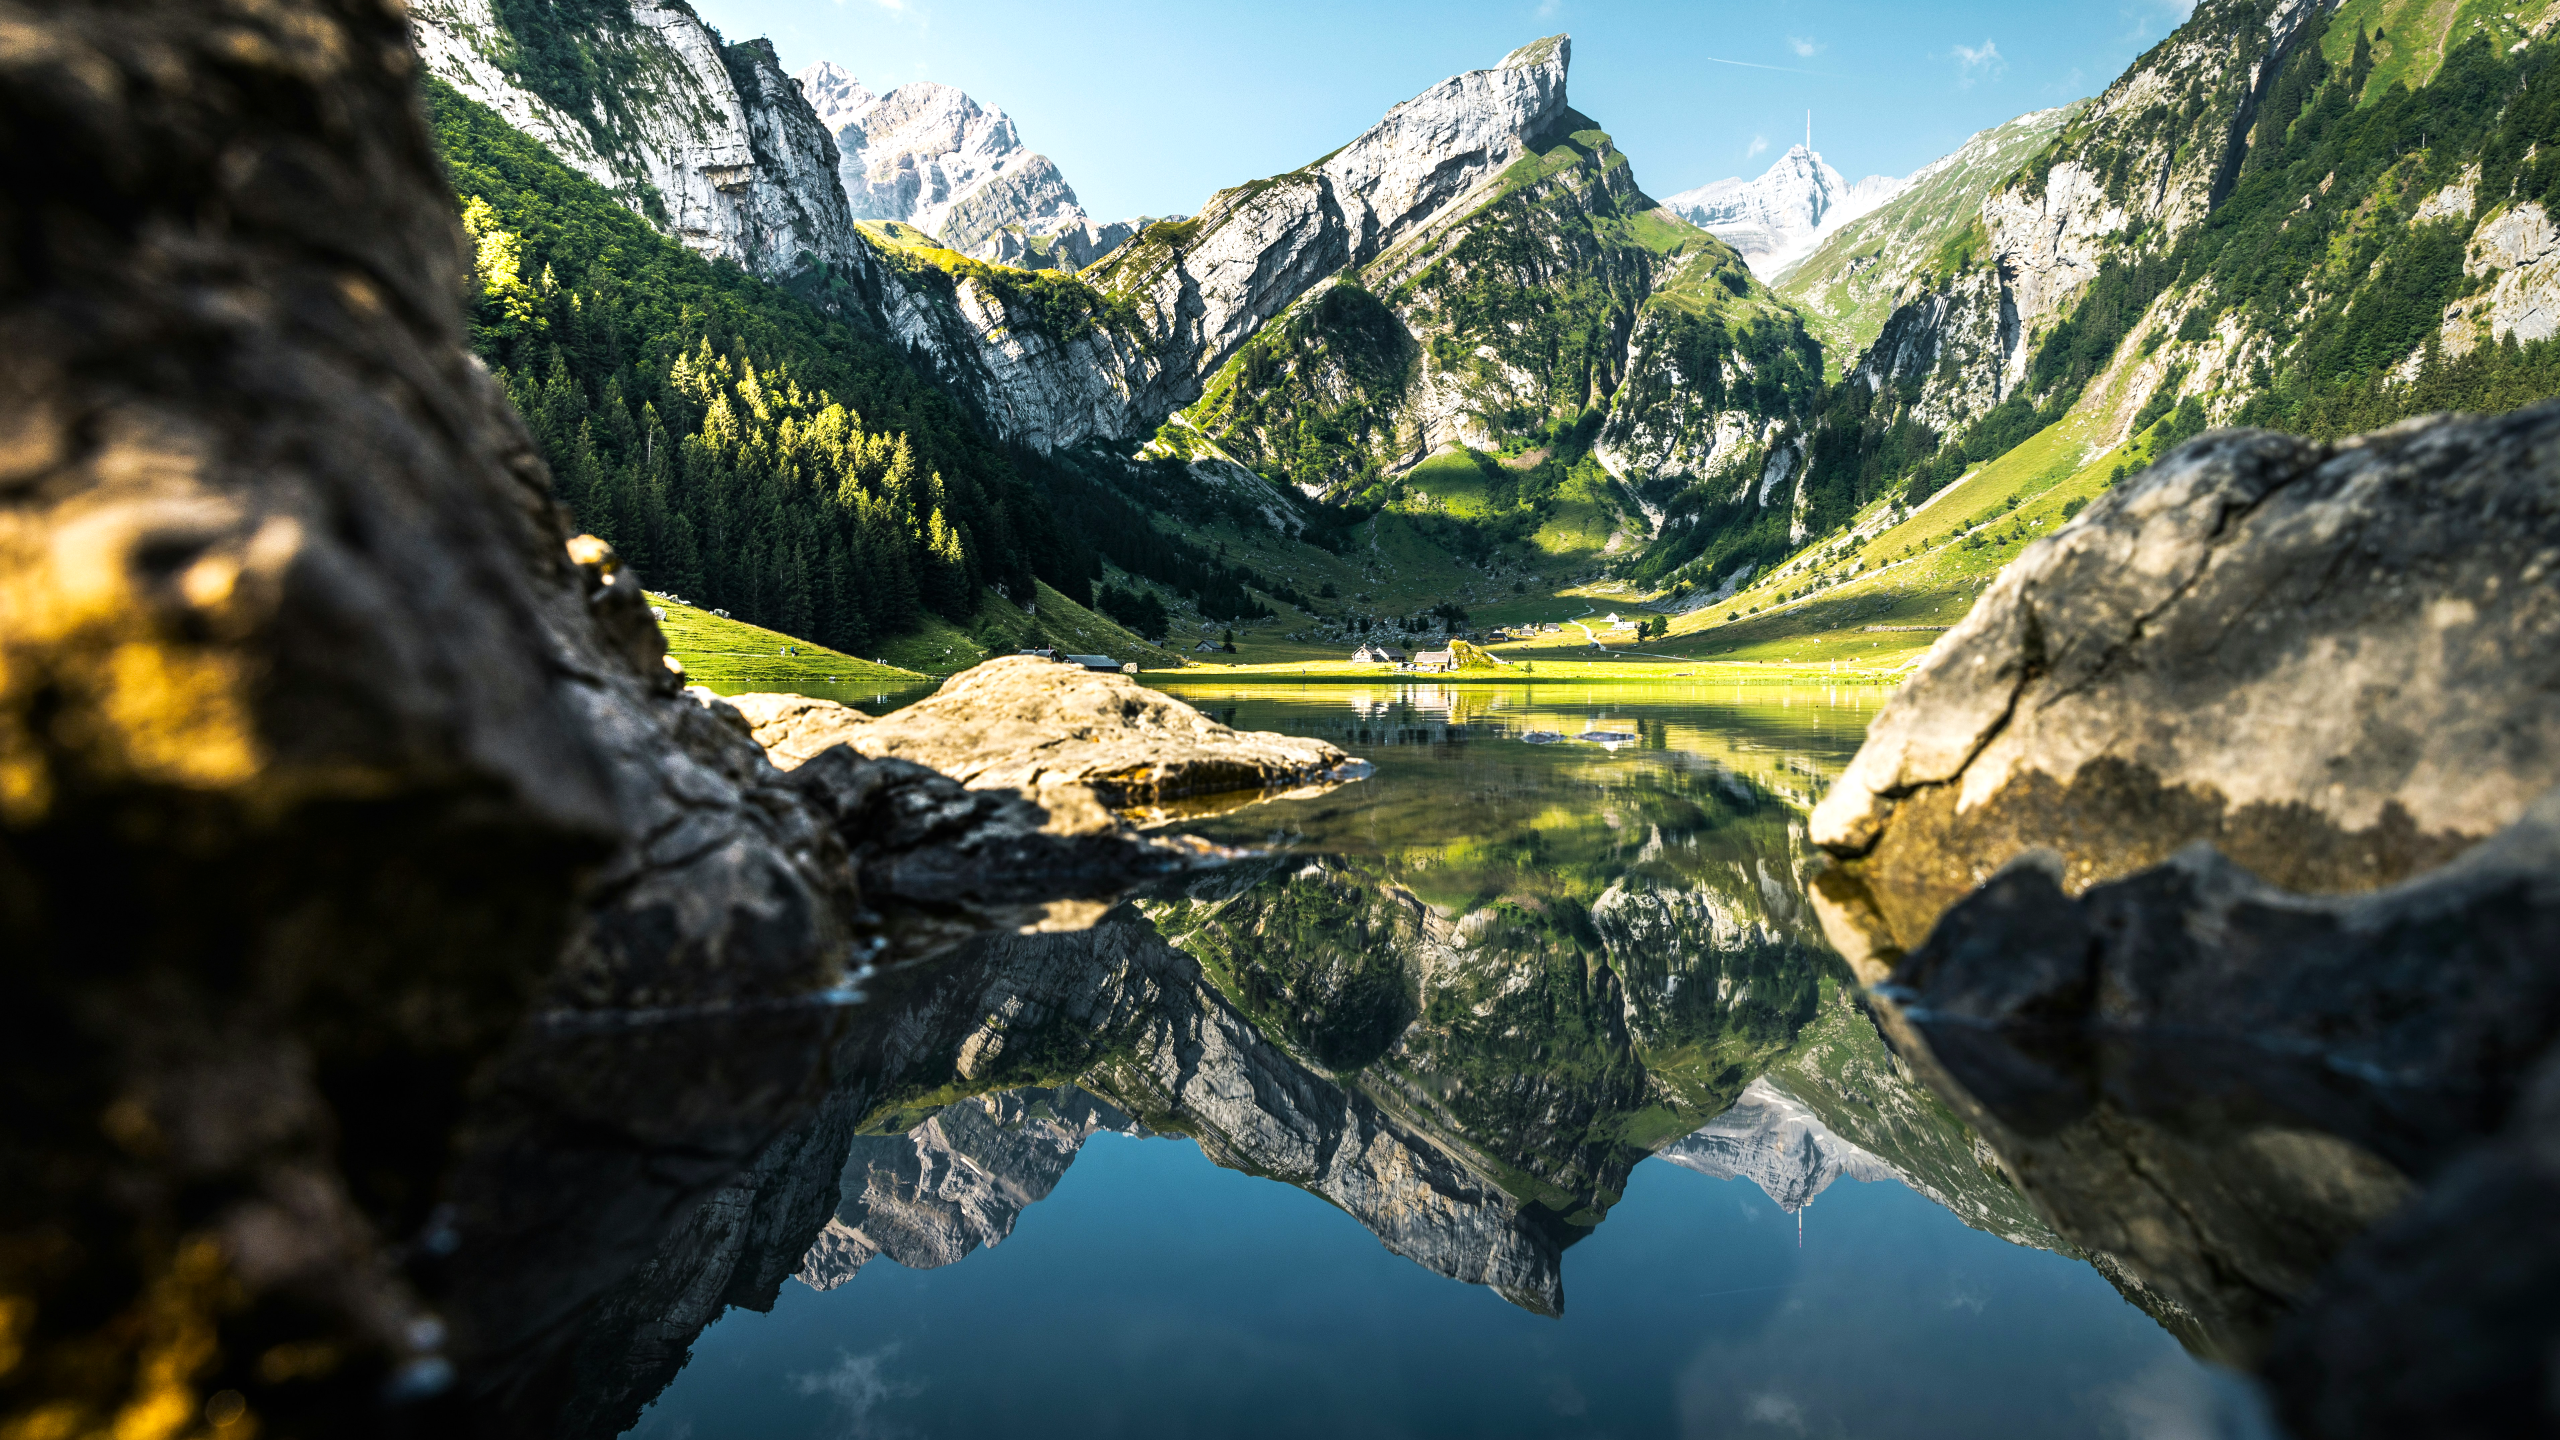 General 2560x1440 nature landscape lake water rocks mountains trees sky reflection house Switzerland